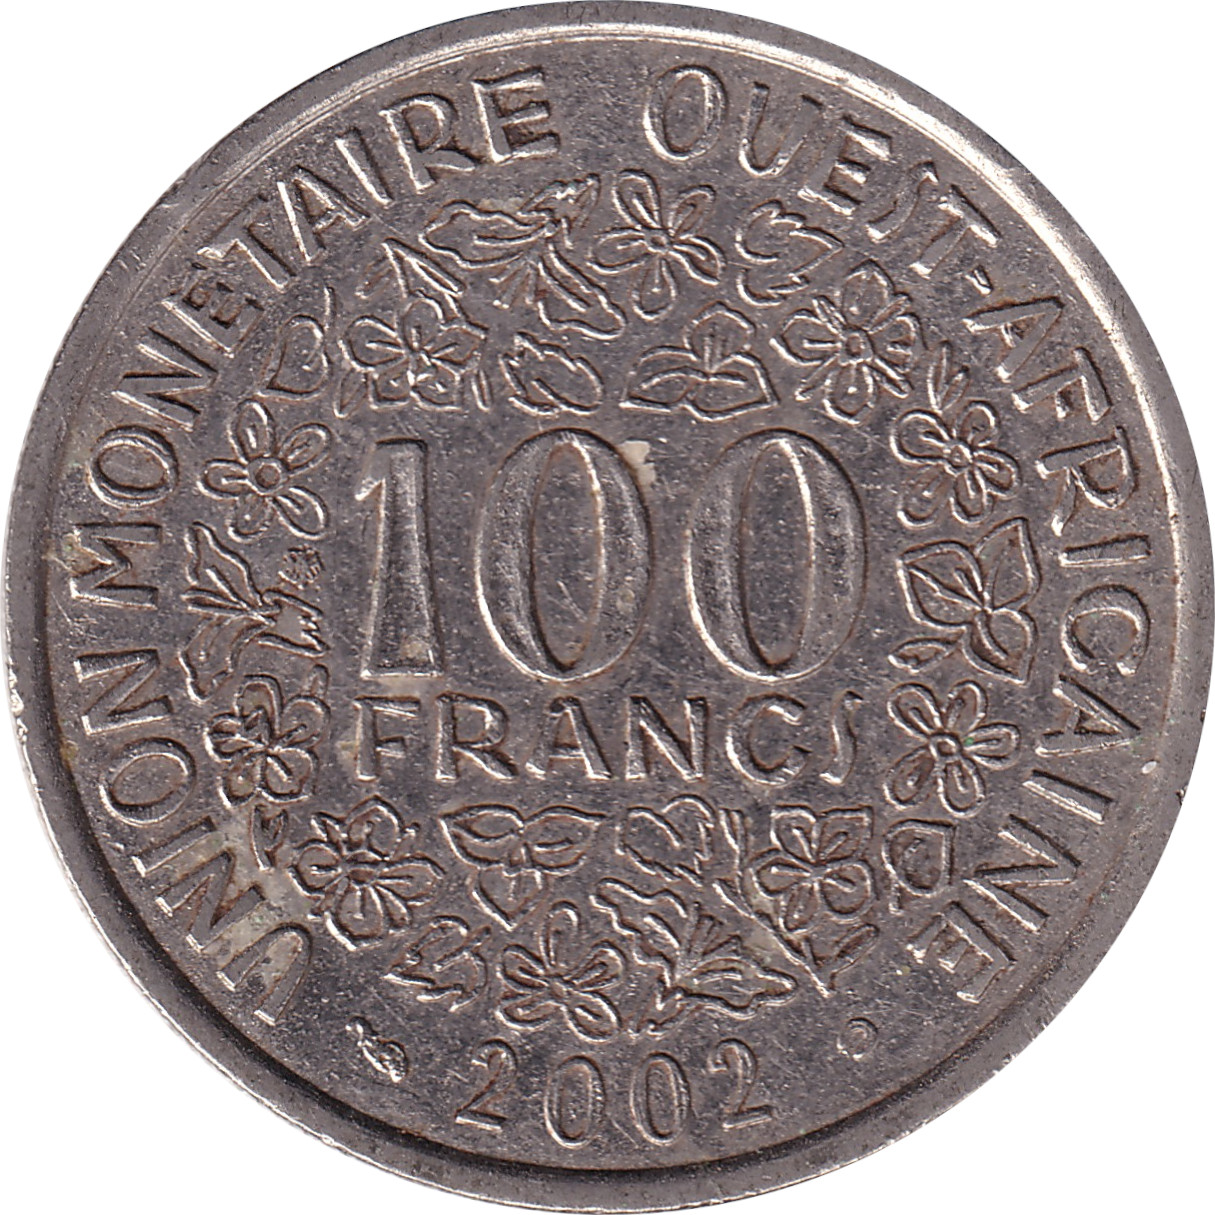 100 francs - Taku